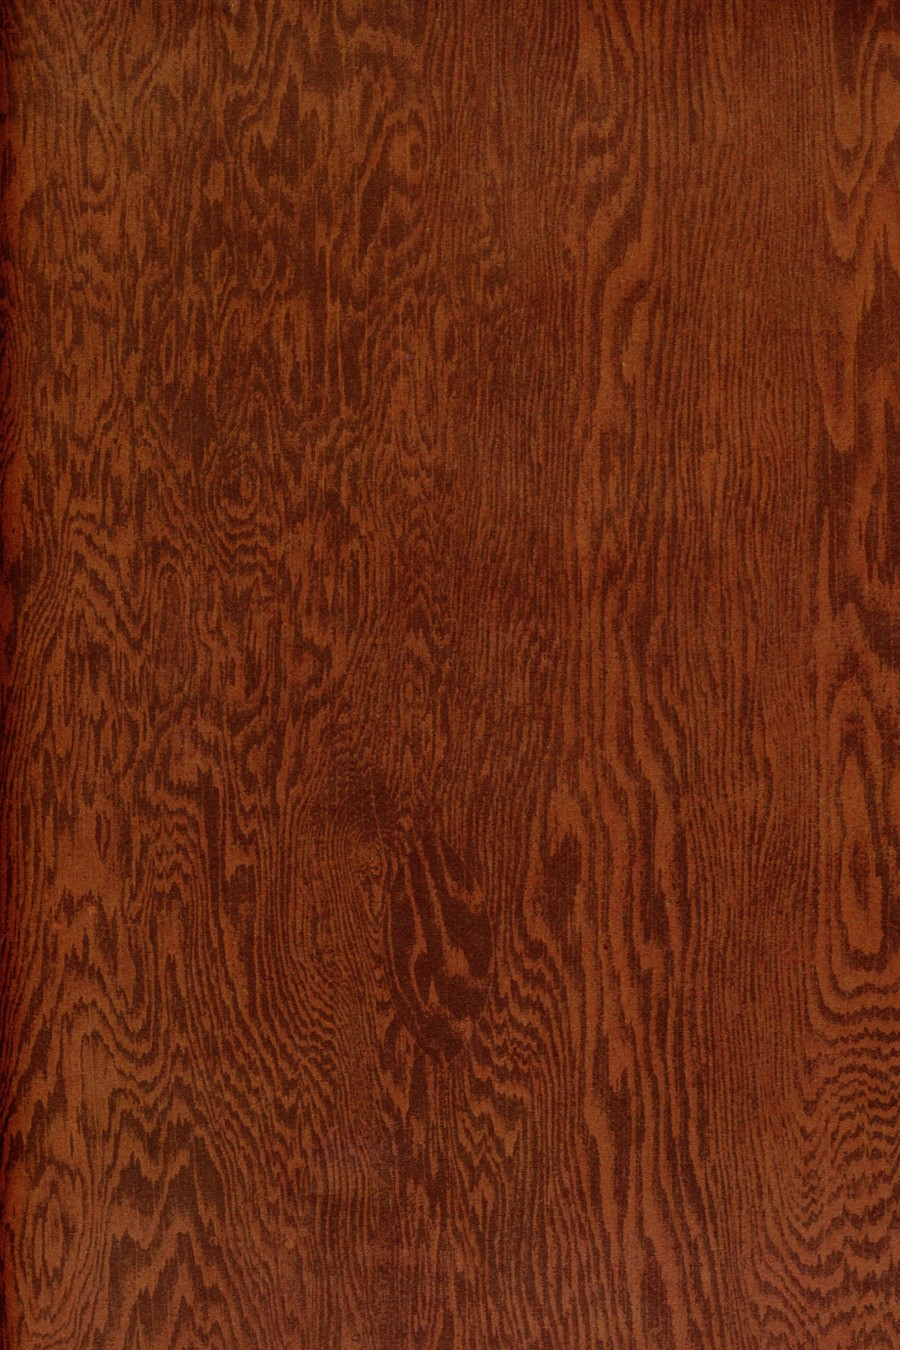 woodgrain texture 1